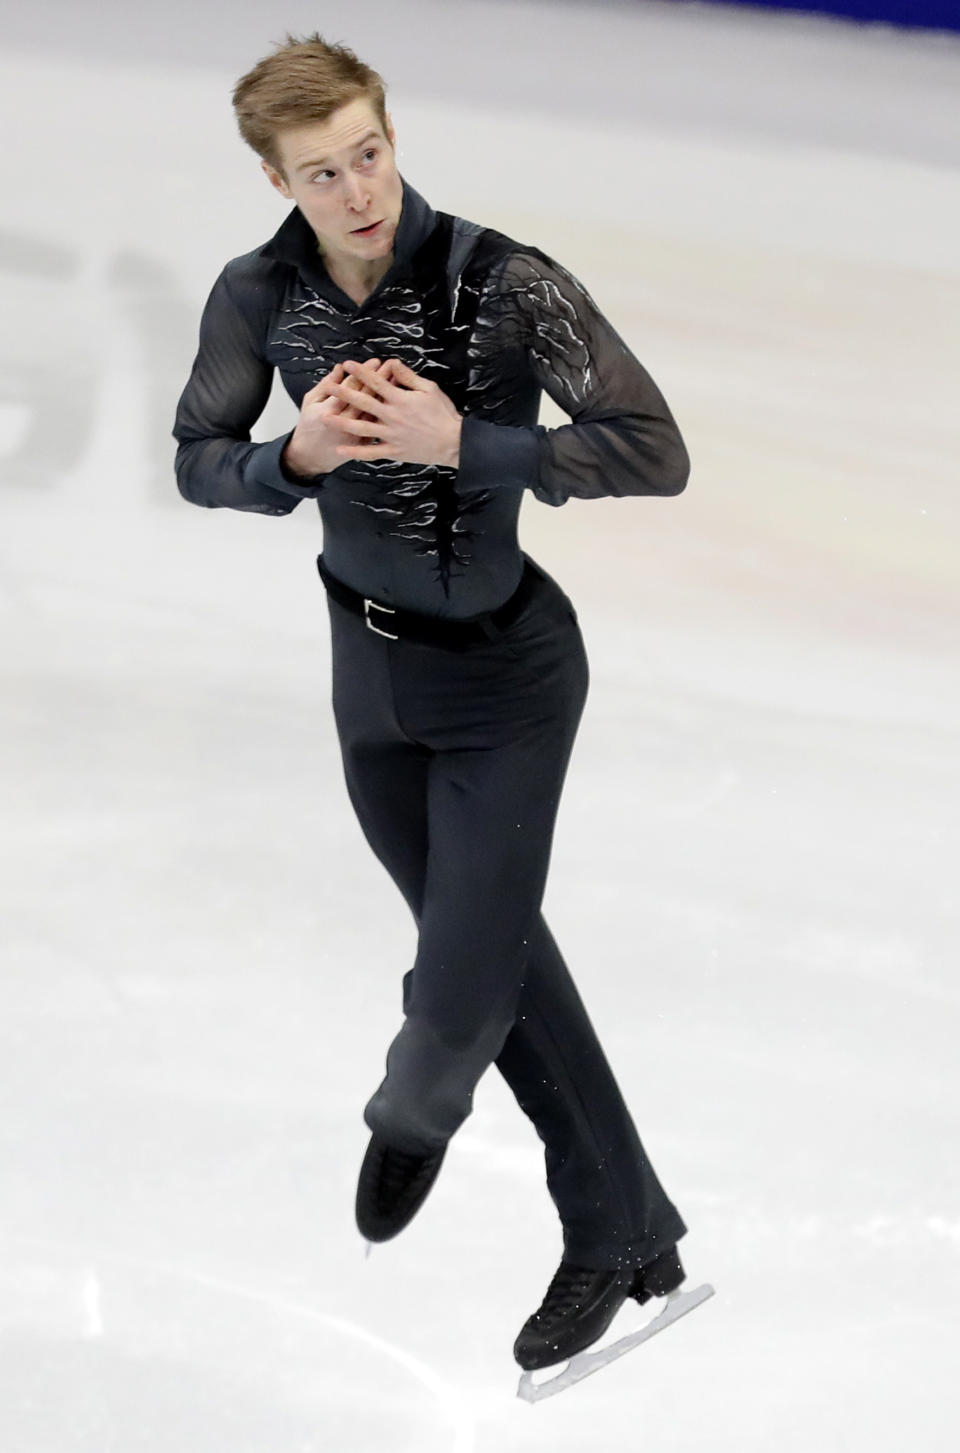 Russia's Alexander Samarin performs in the men's short program at the ISU European figure skating championships in Minsk, Belarus, Thursday, Jan. 24, 2019. (AP Photo/Sergei Grits)